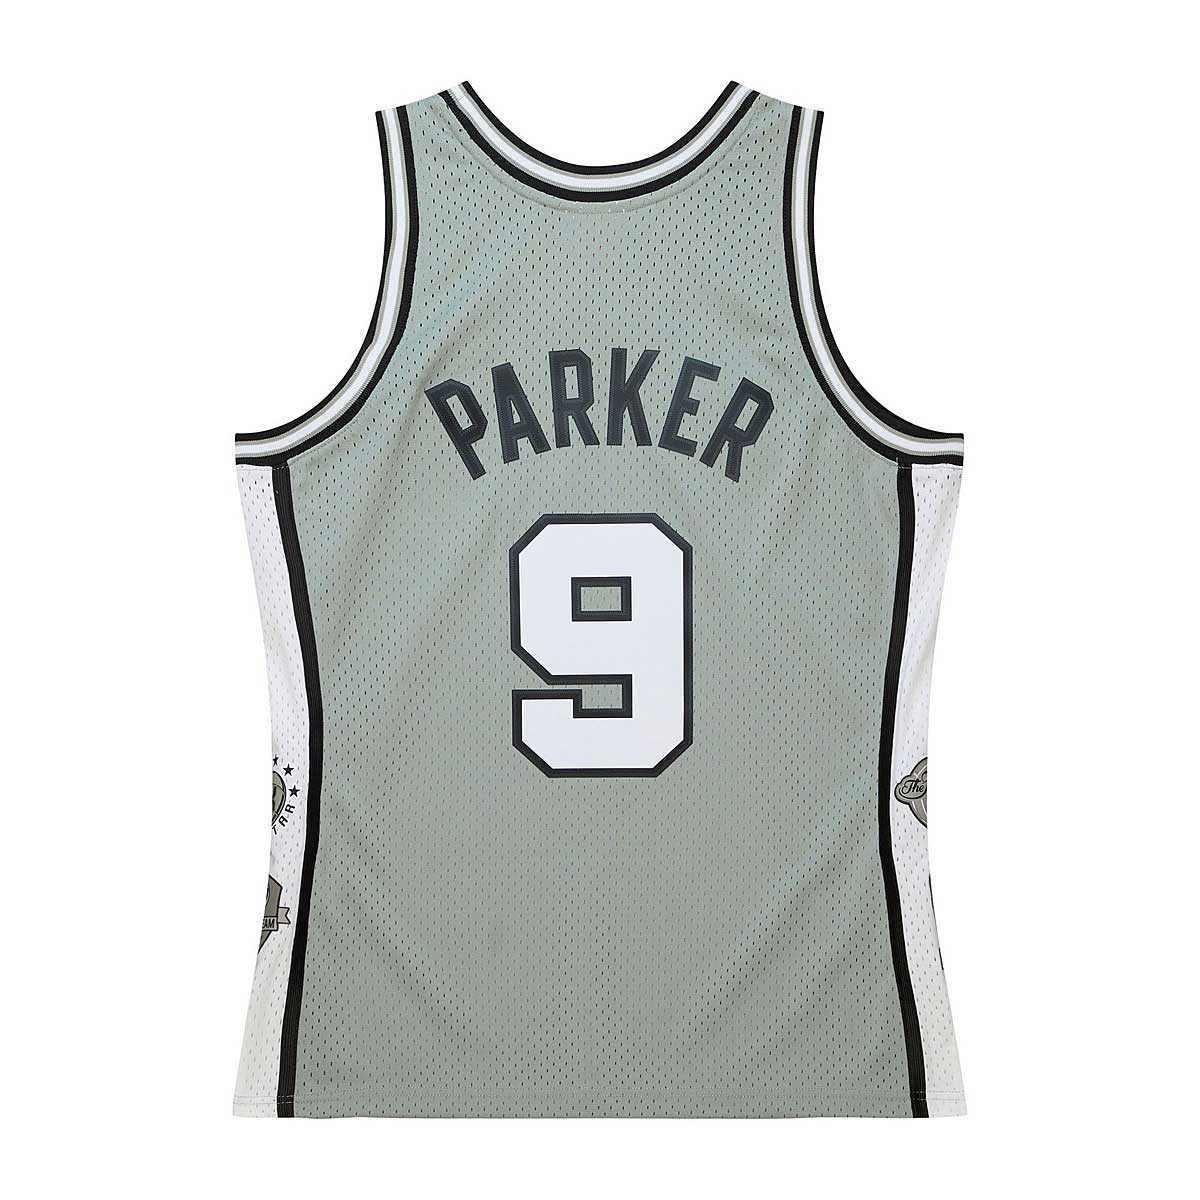 Tony Parker Adidas Jersey Size Large 